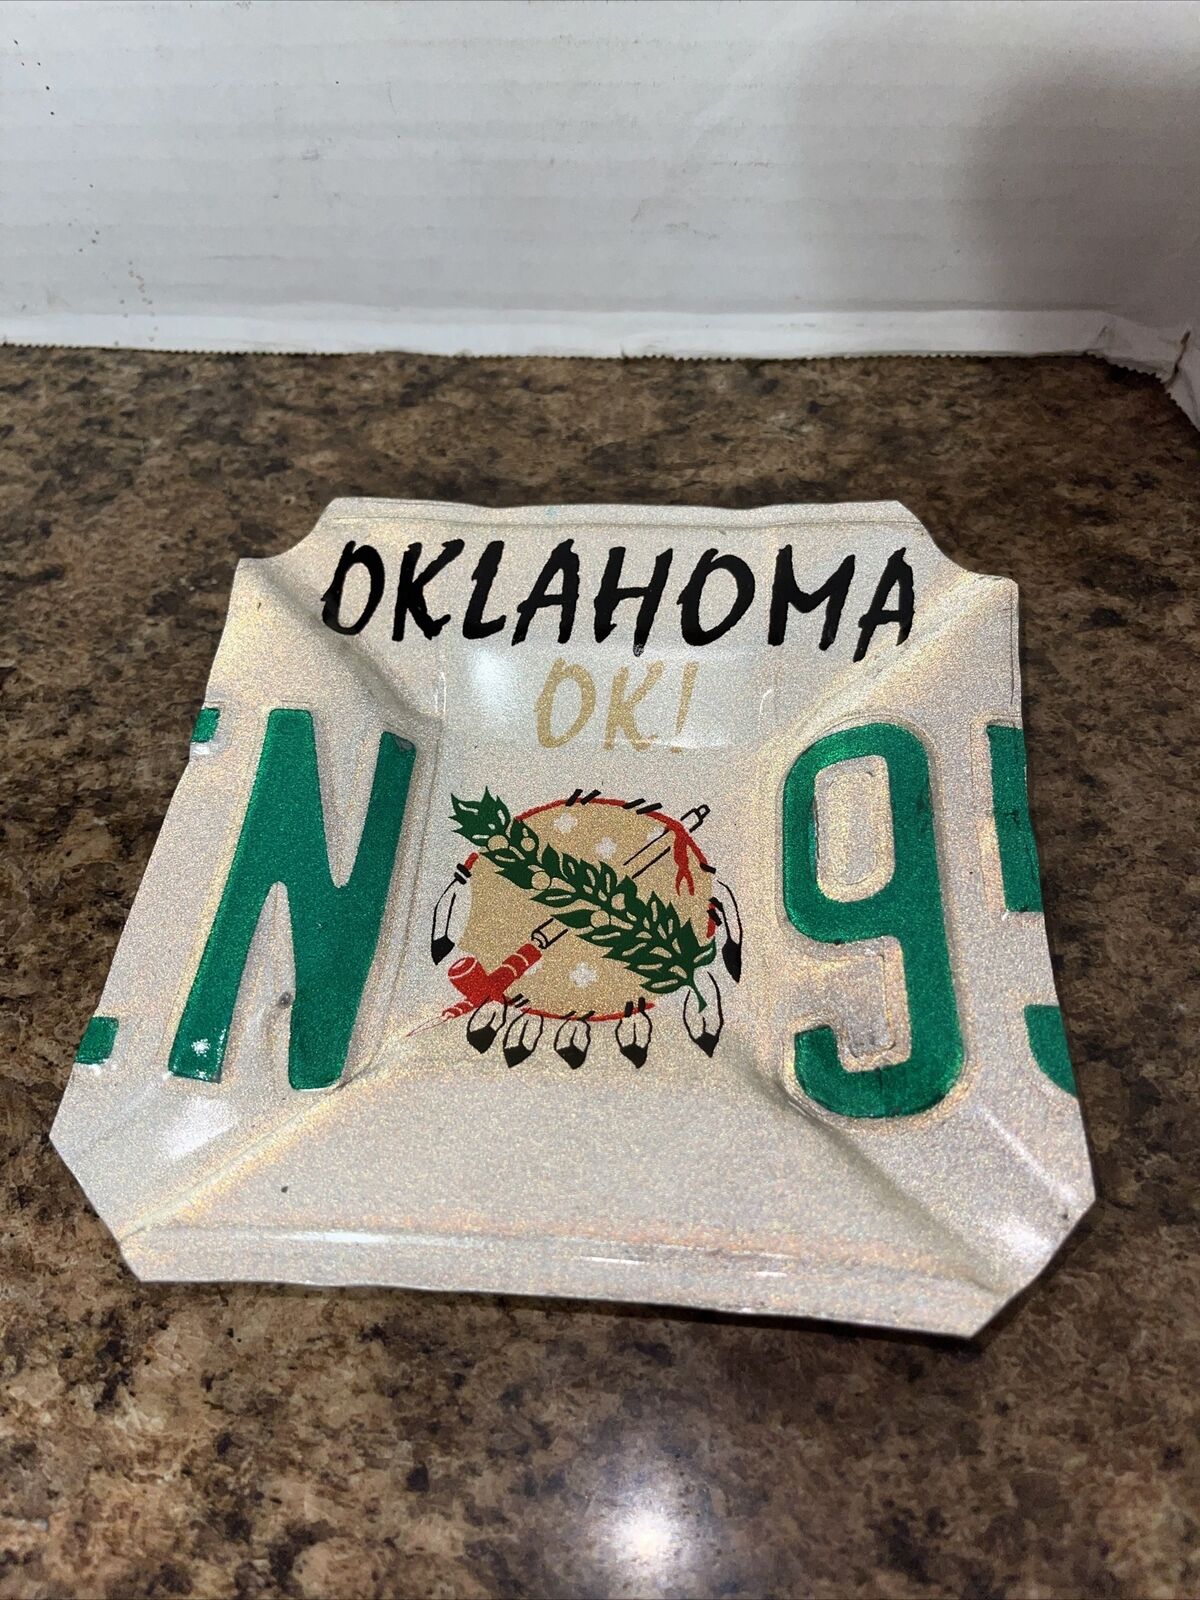 Original Authentic Oklahoma License Plate Ashtray Oklahoma OK N 9